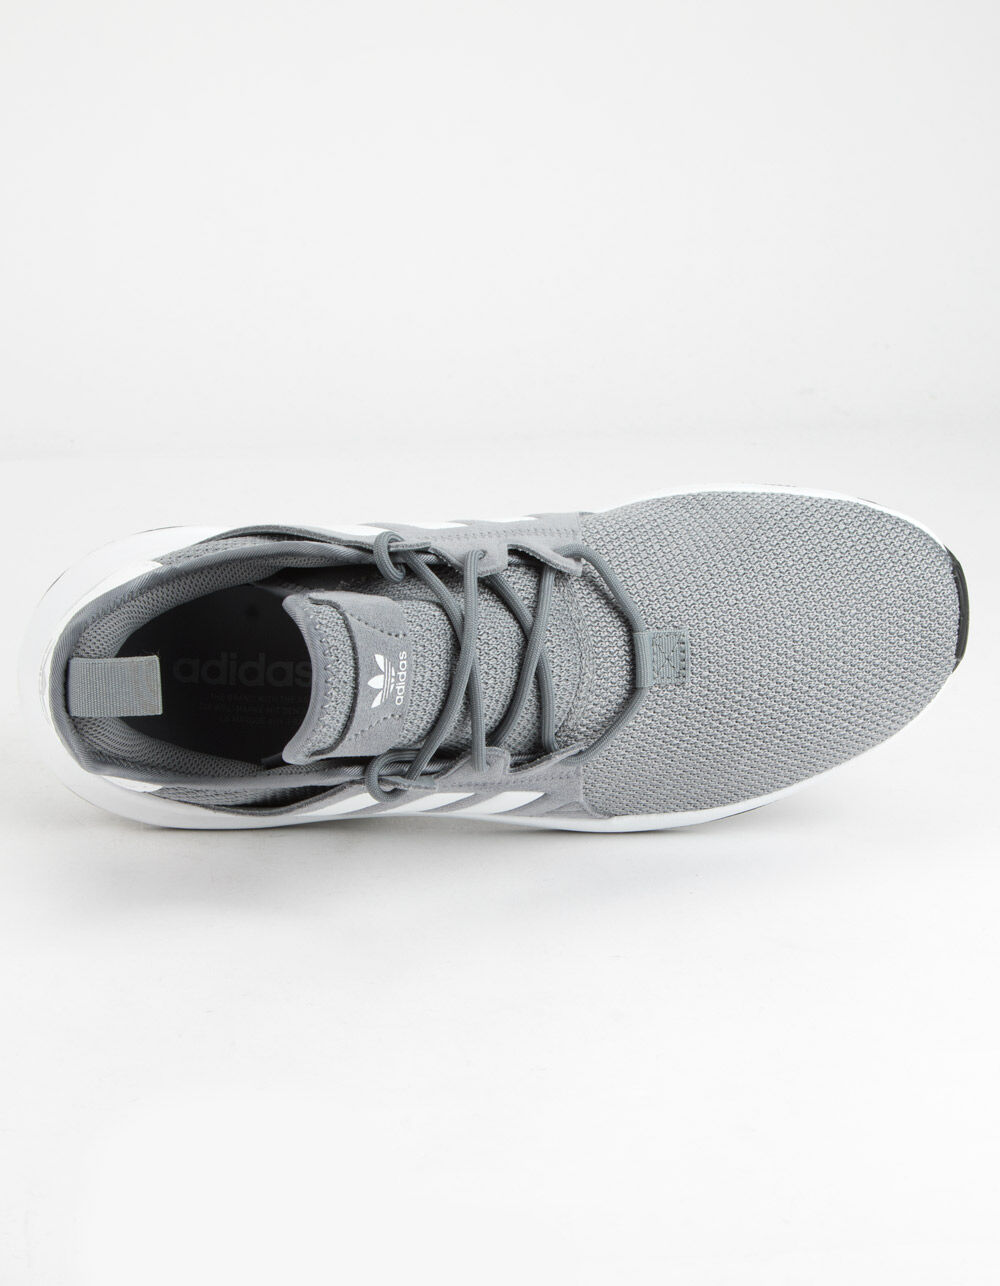 ADIDAS X_PLR Gray & Cloud White Shoes - GREY/CLOUD WHITE/CORE BLACK ...